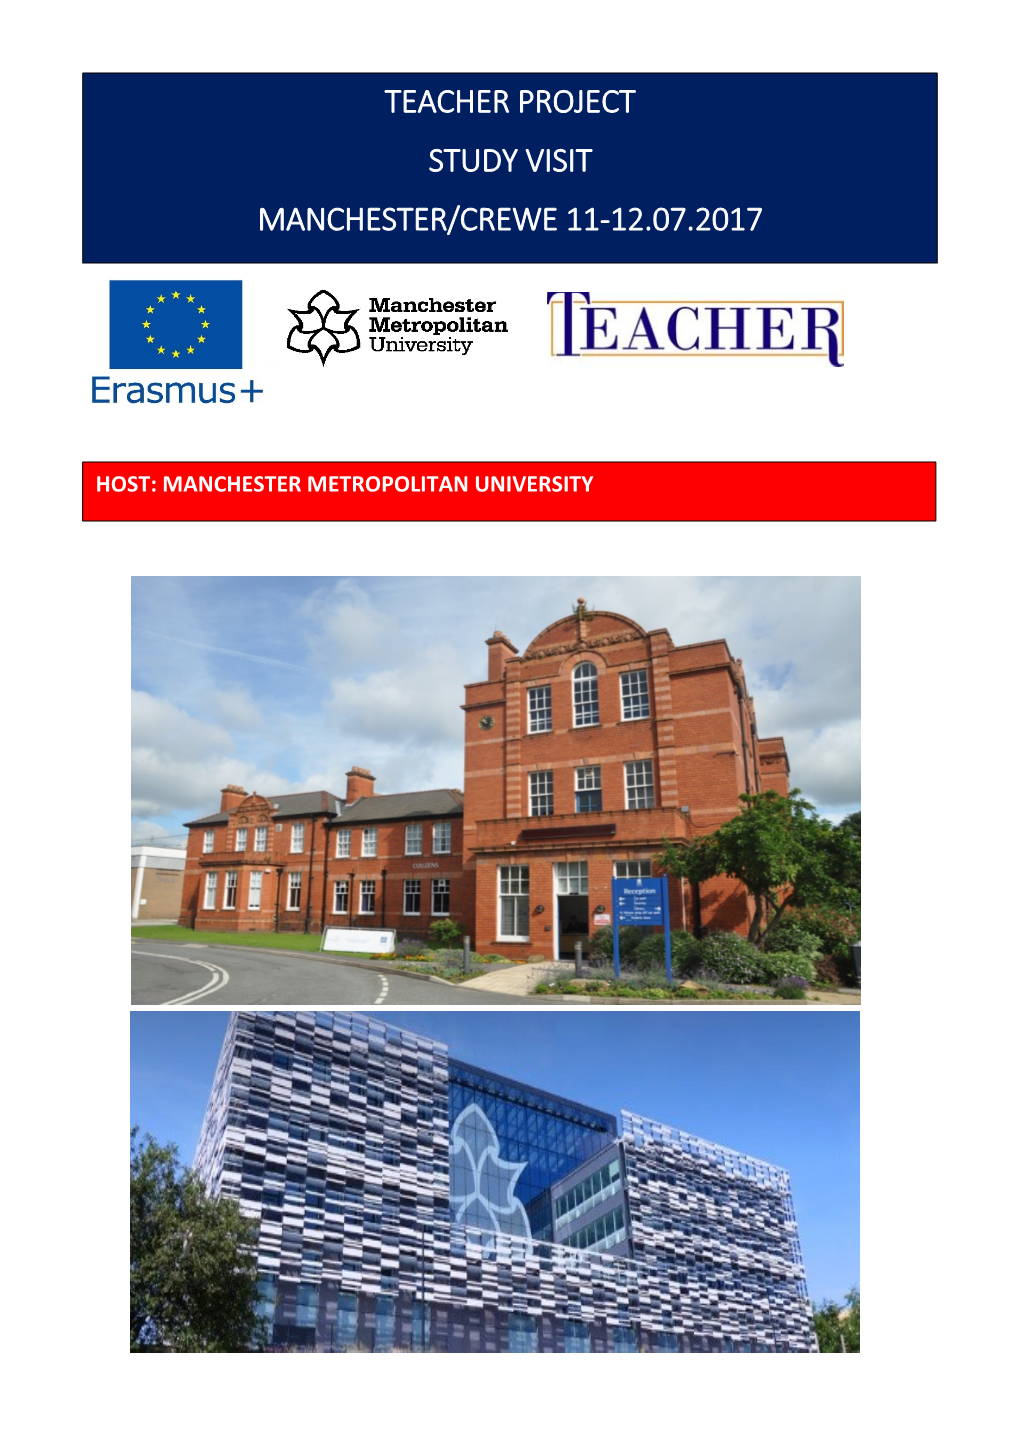 Teacher Project Study Visit Manchester/Crewe 11-12.07